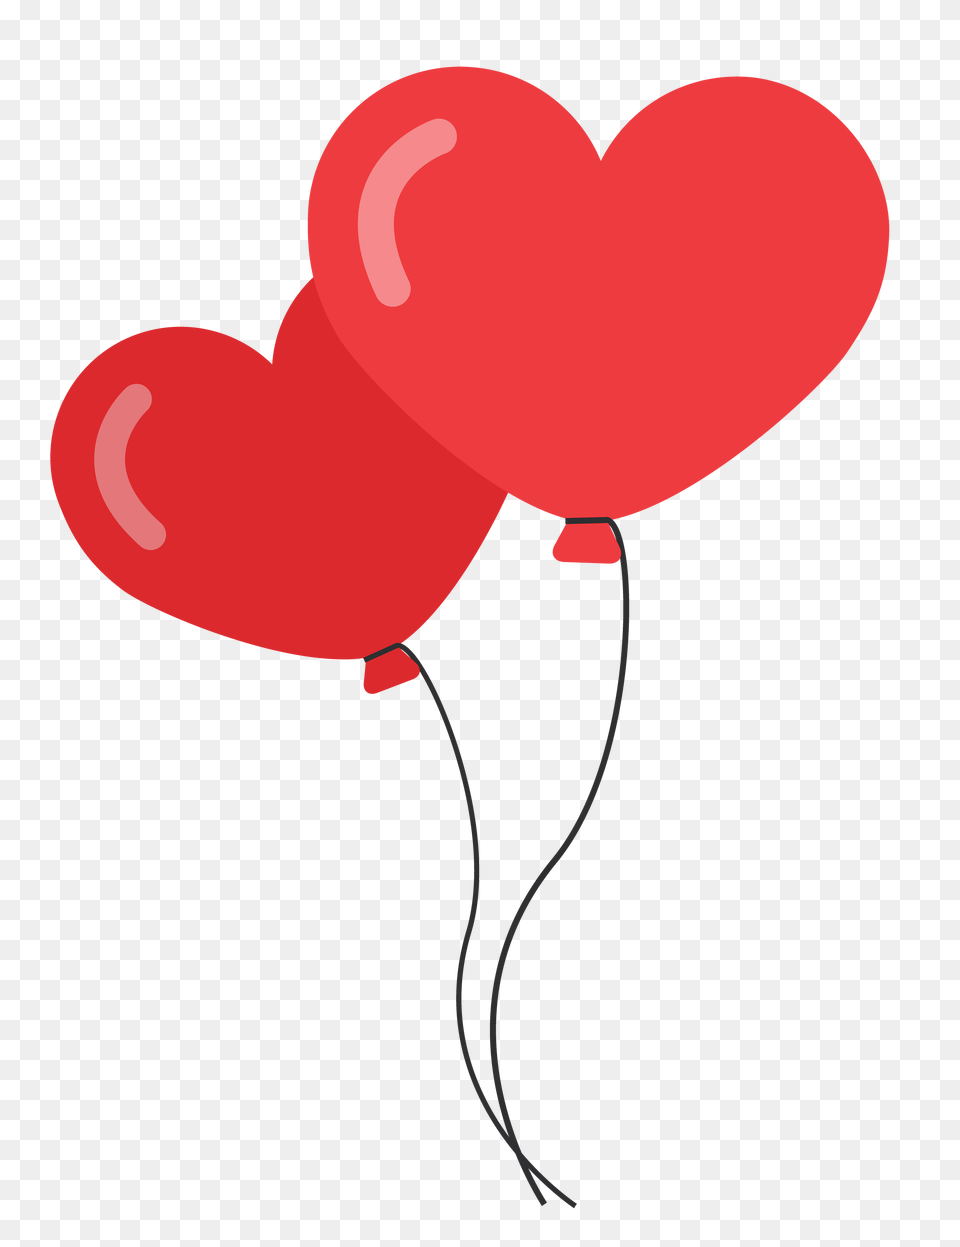 Heart Shaped Balloons Pngpix Heart Shape Balloon, Flower, Plant, Carnation, Rose Png Image